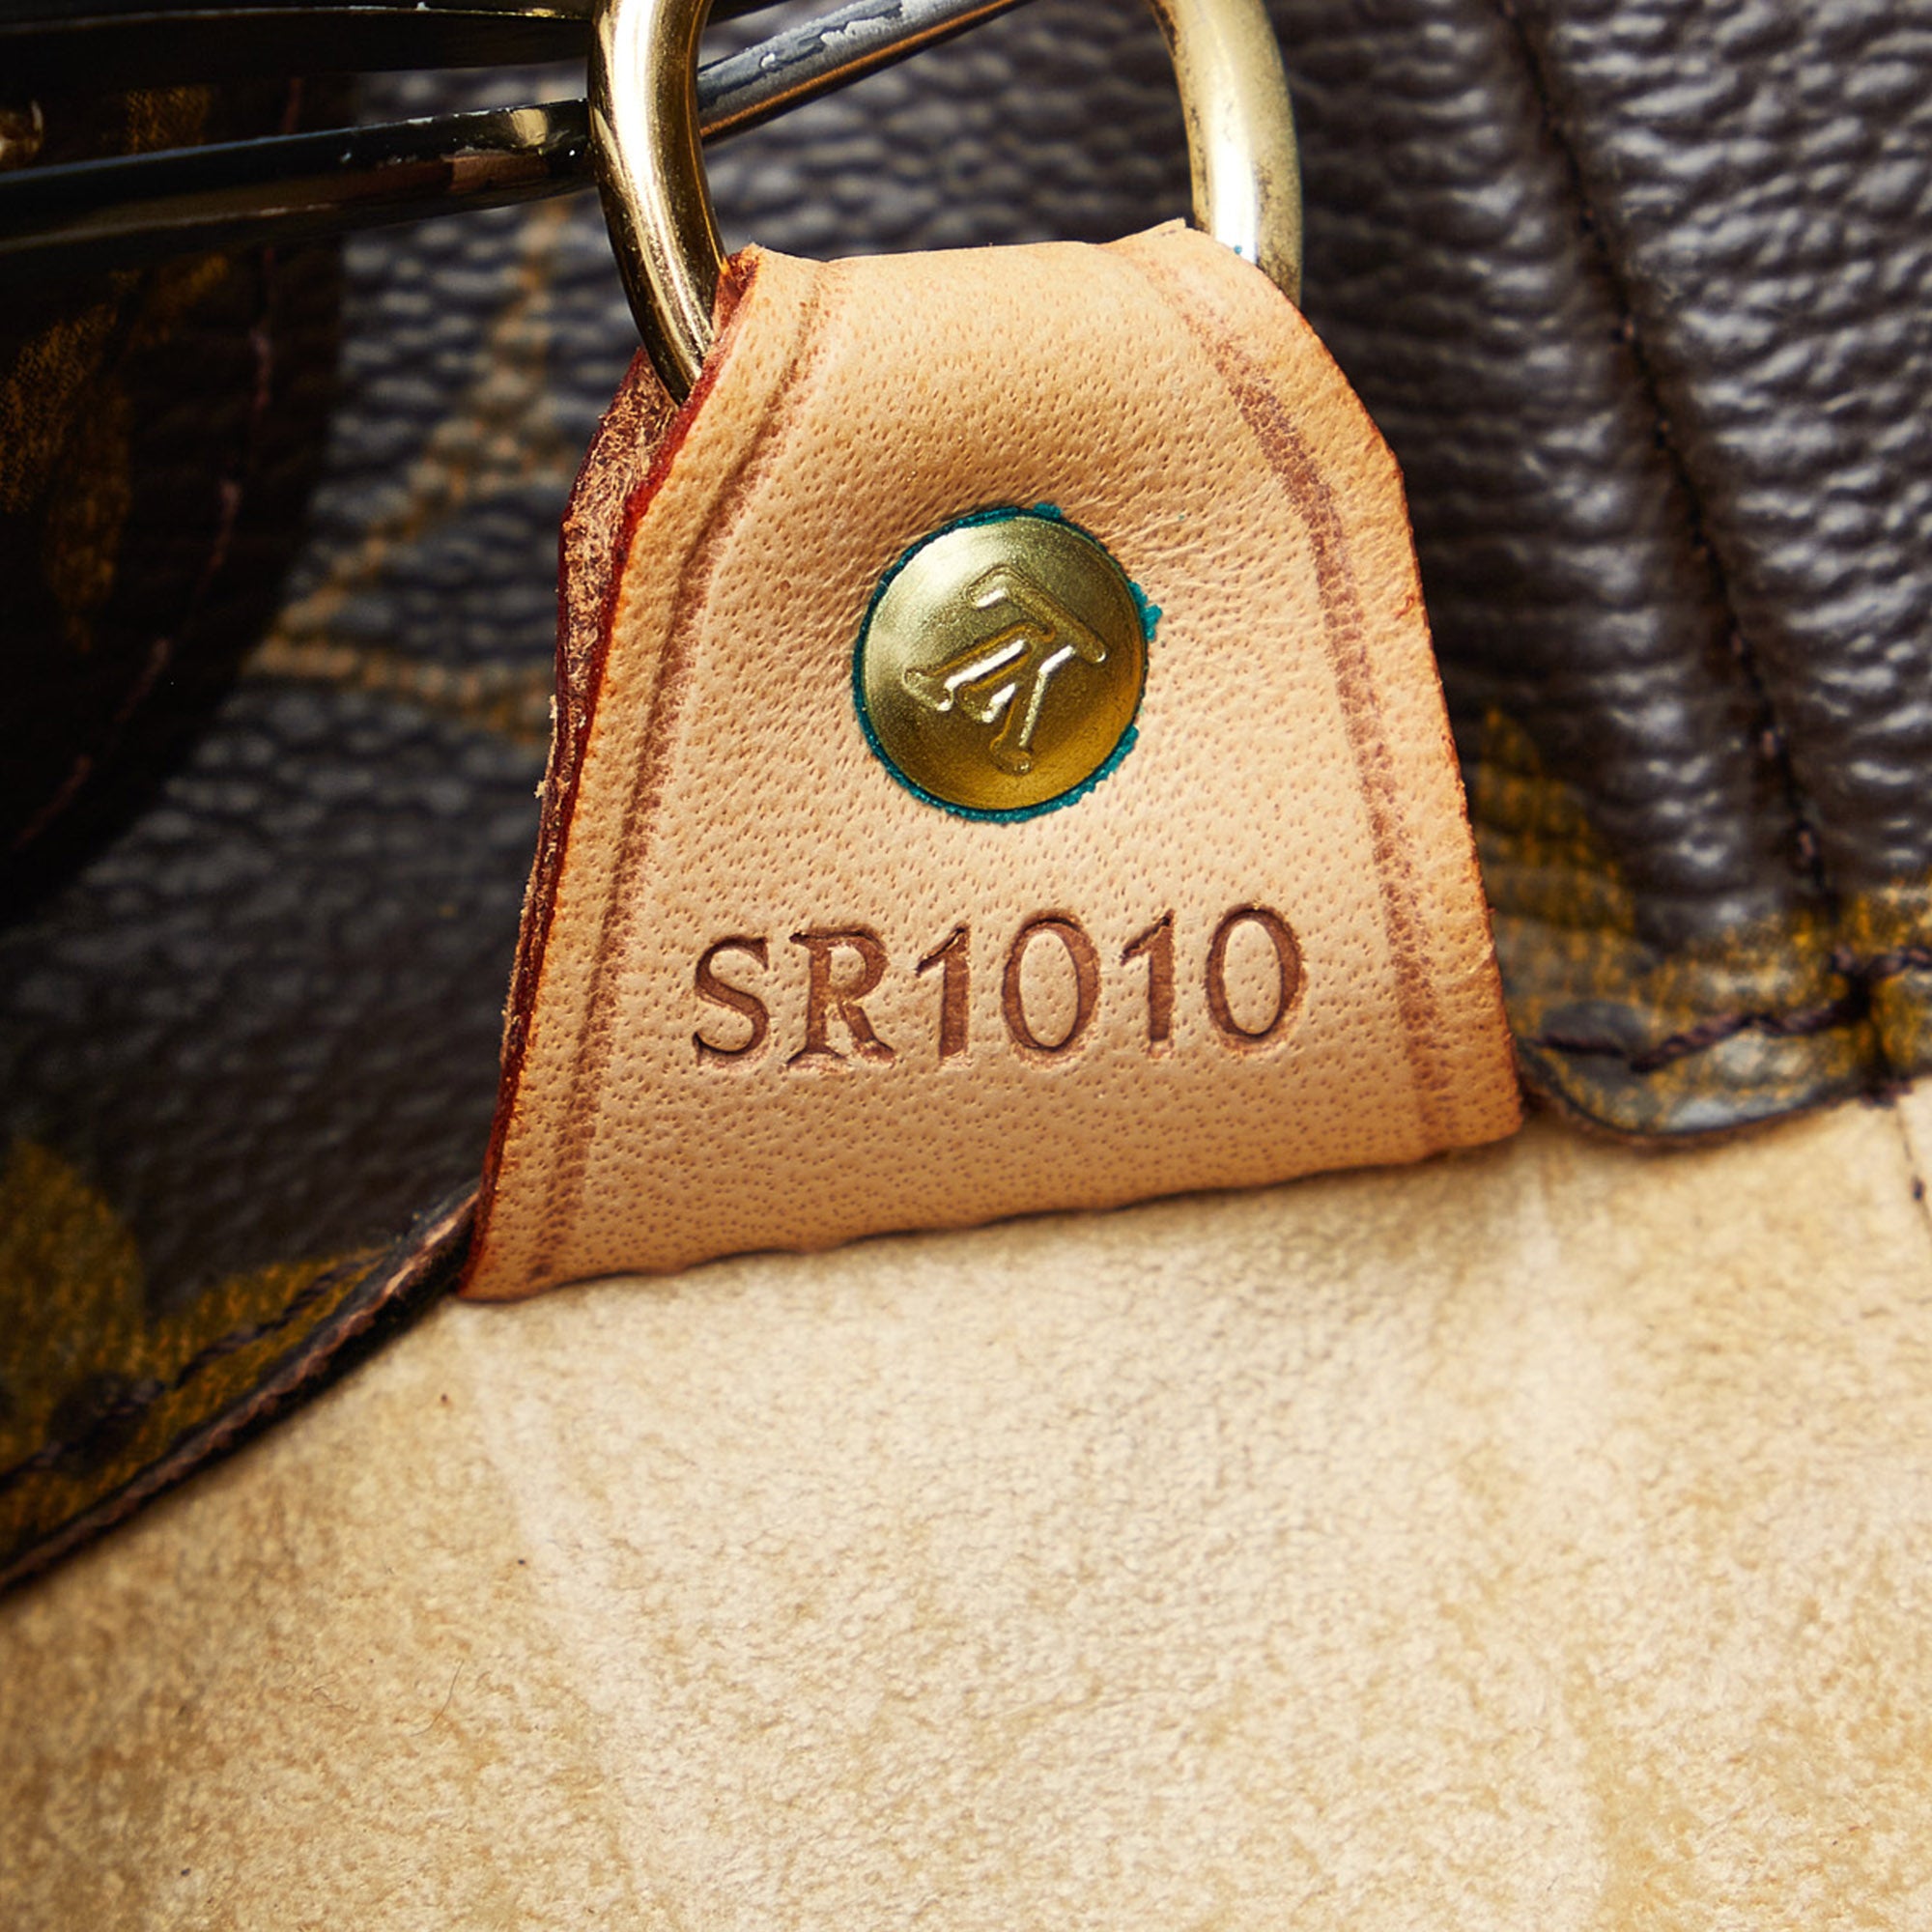 Brown Louis Vuitton Monogram Luco Tote Bag, scarpe sneakers louis vuitton